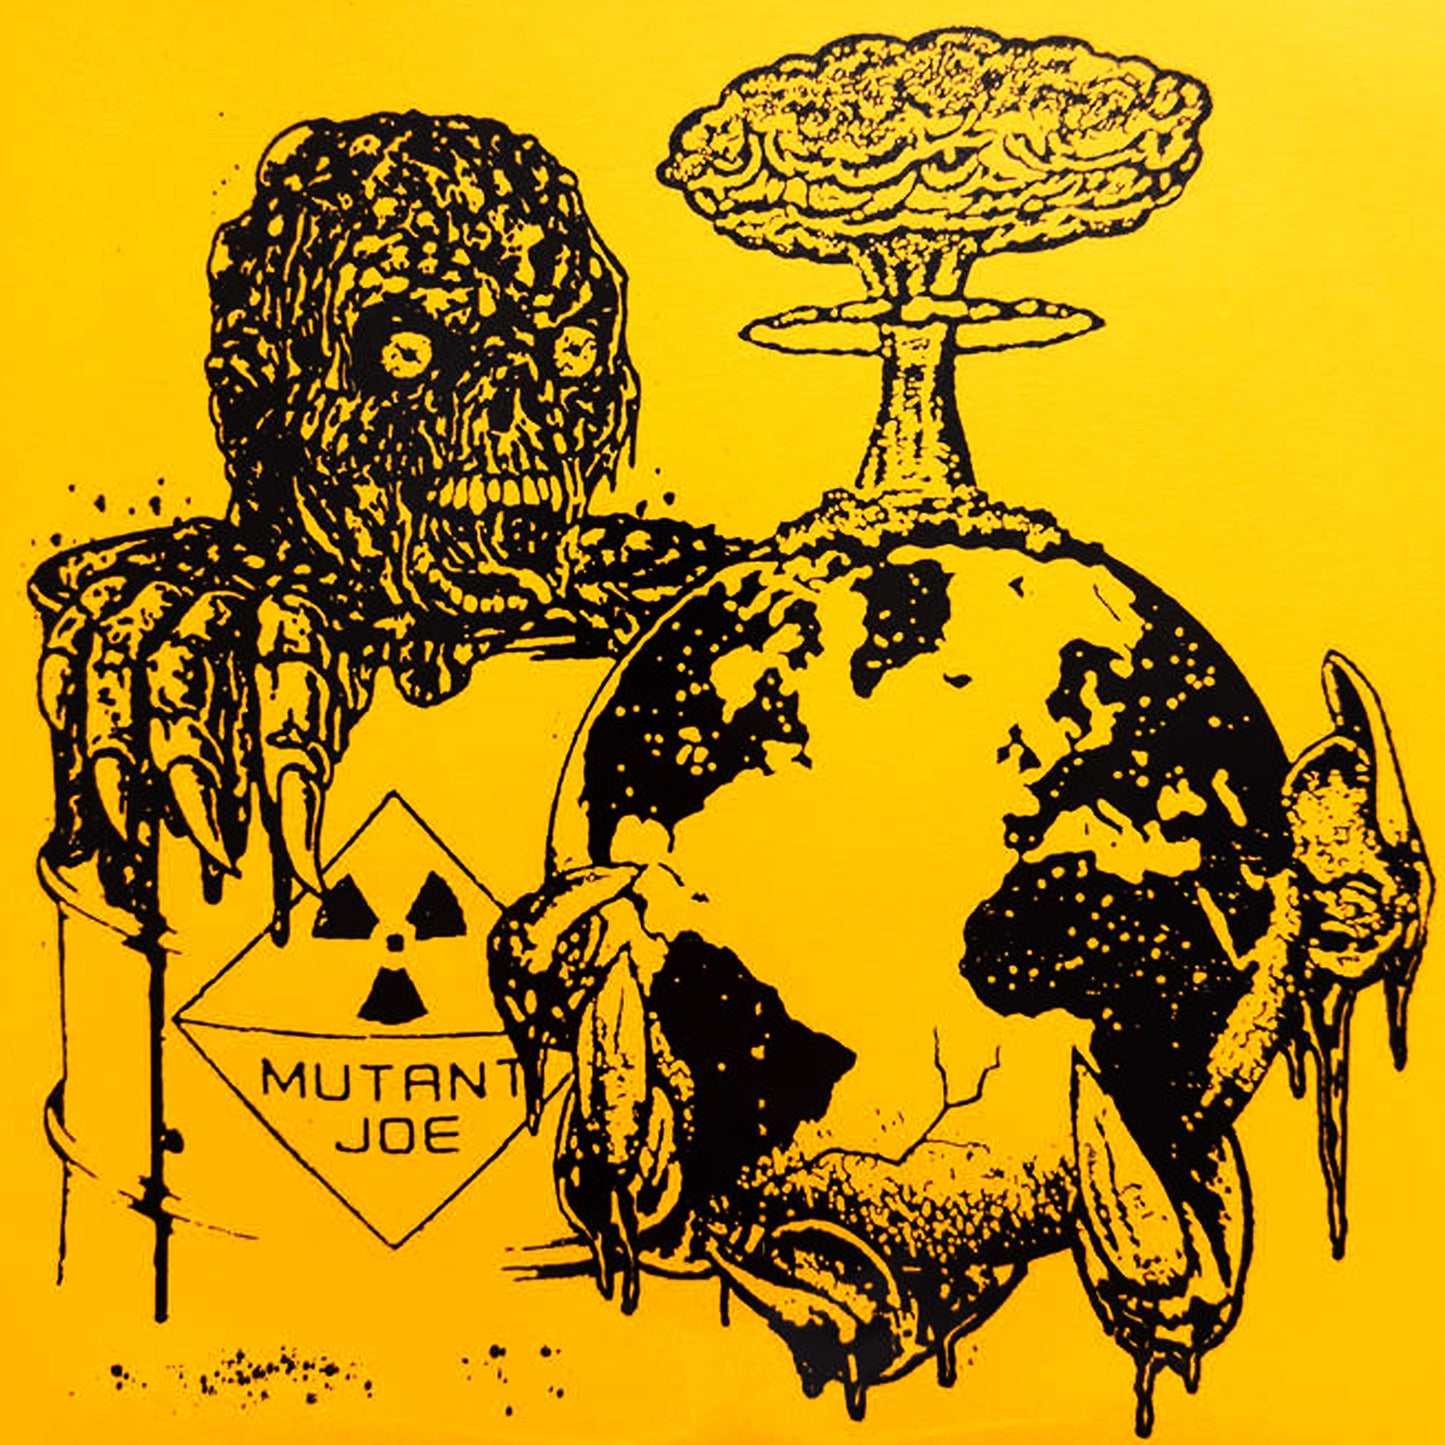 MUTANT JOE - "NEW WORLD DISORDER" 10"